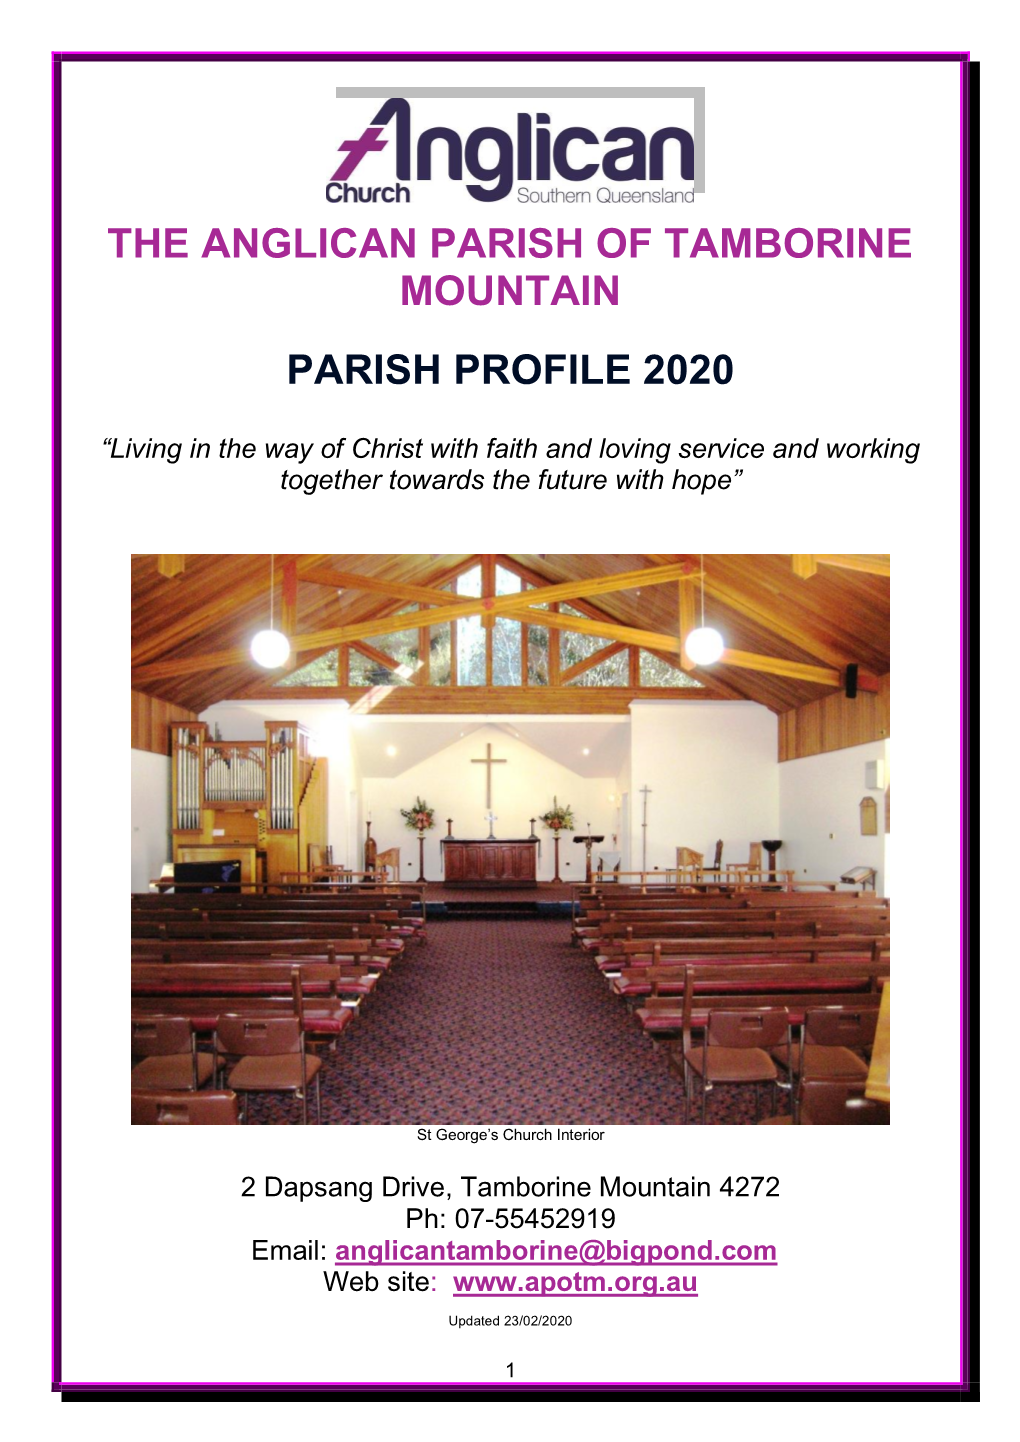 The Anglican Parish of Tamborine Mountain